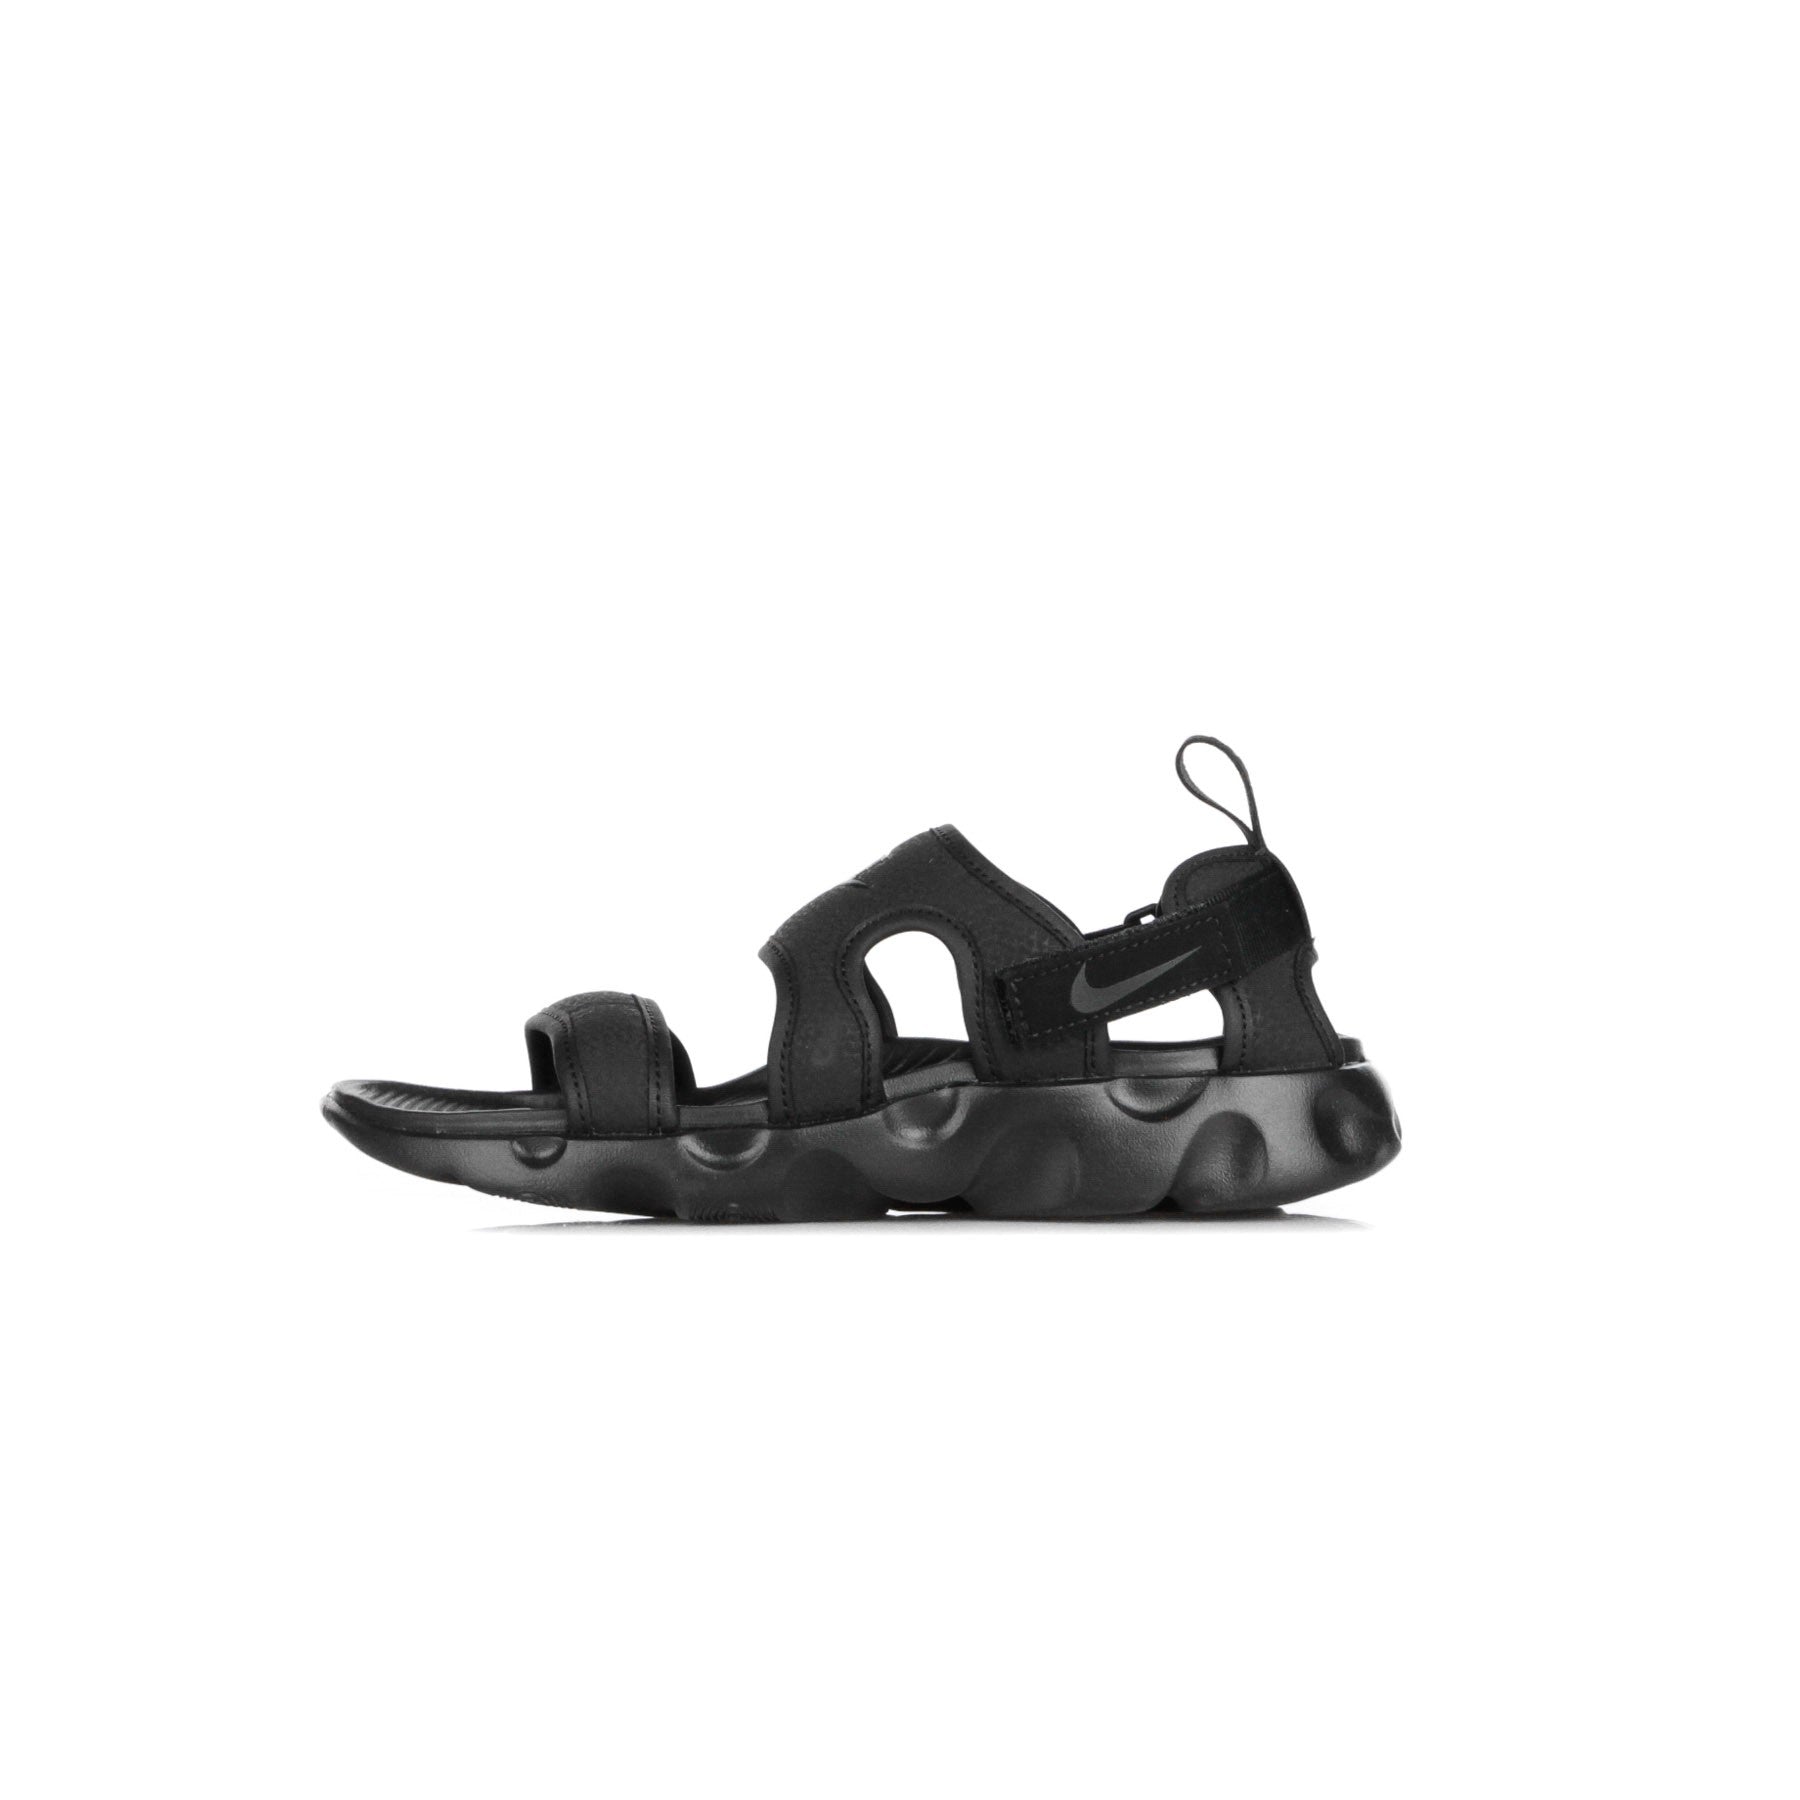 Nike, Sandalo Donna W Owaysis Sandal, Black/black/black